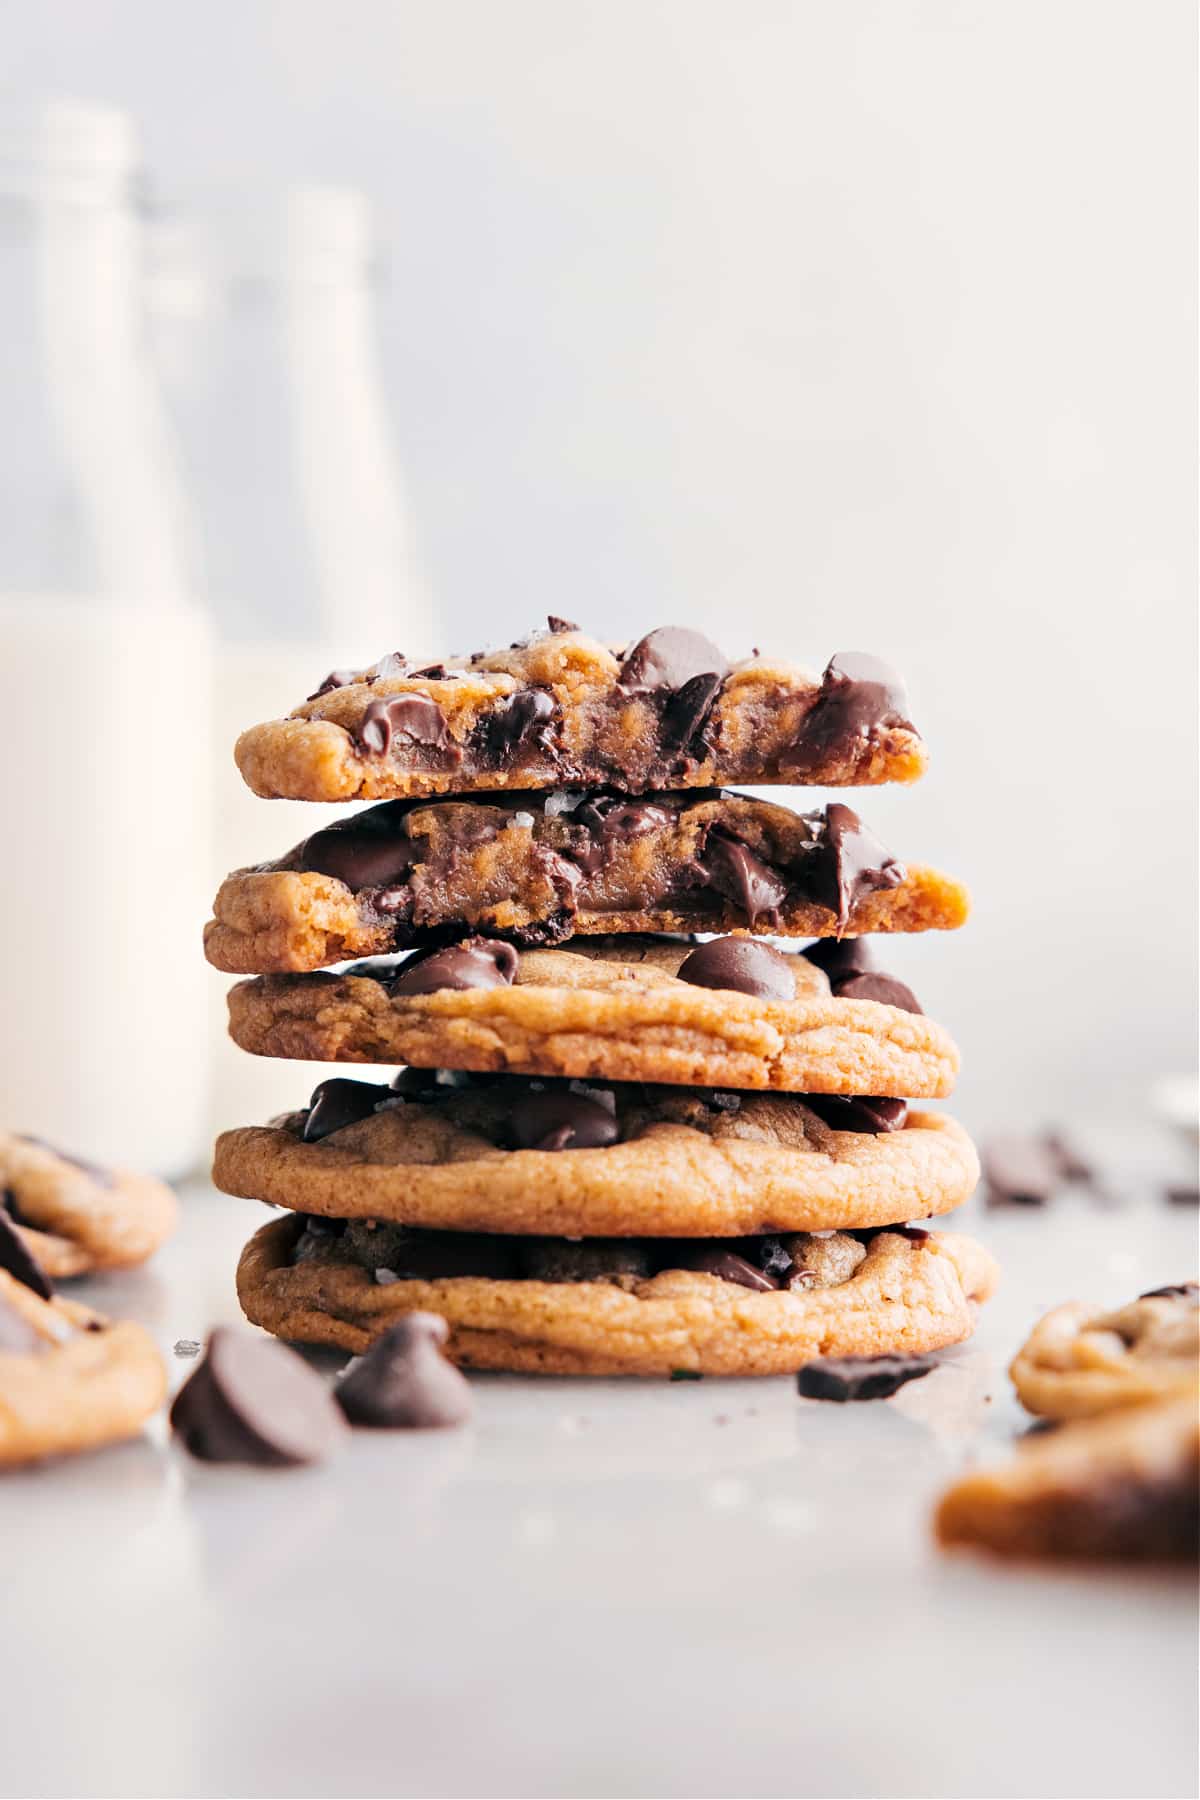 13 Cookie Spatula by STIR